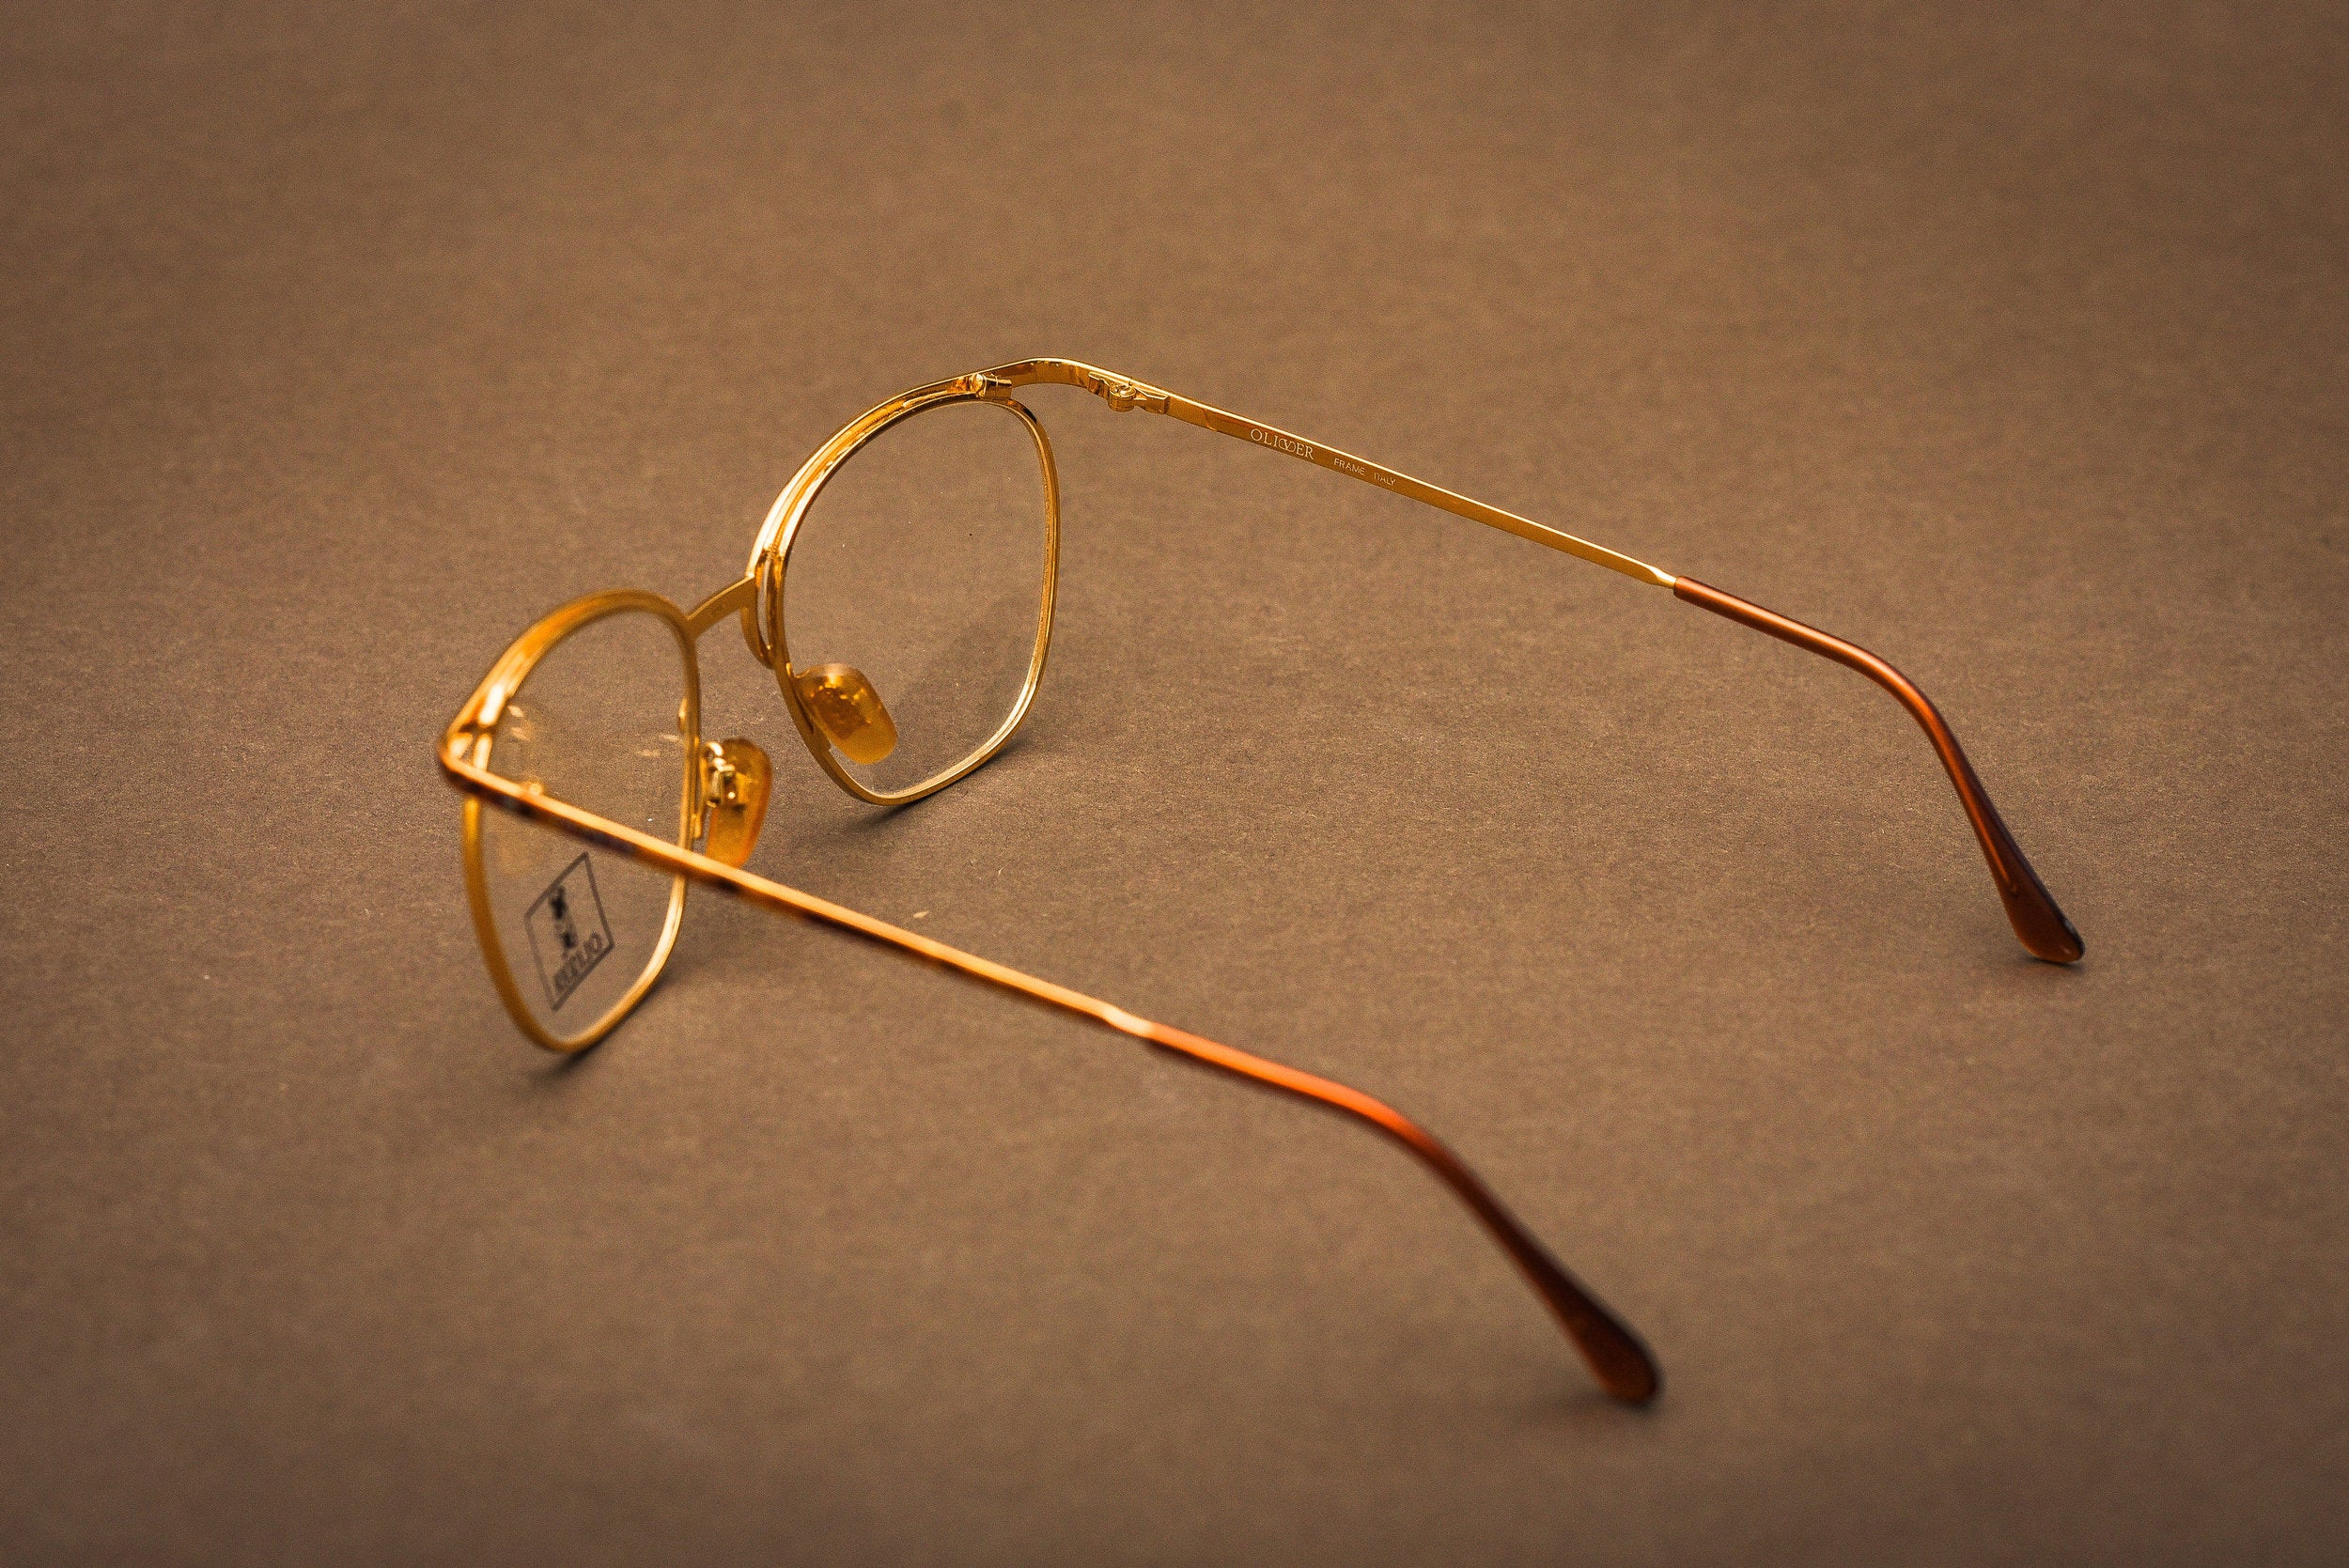 Oliver by Valentino 1321 glasses